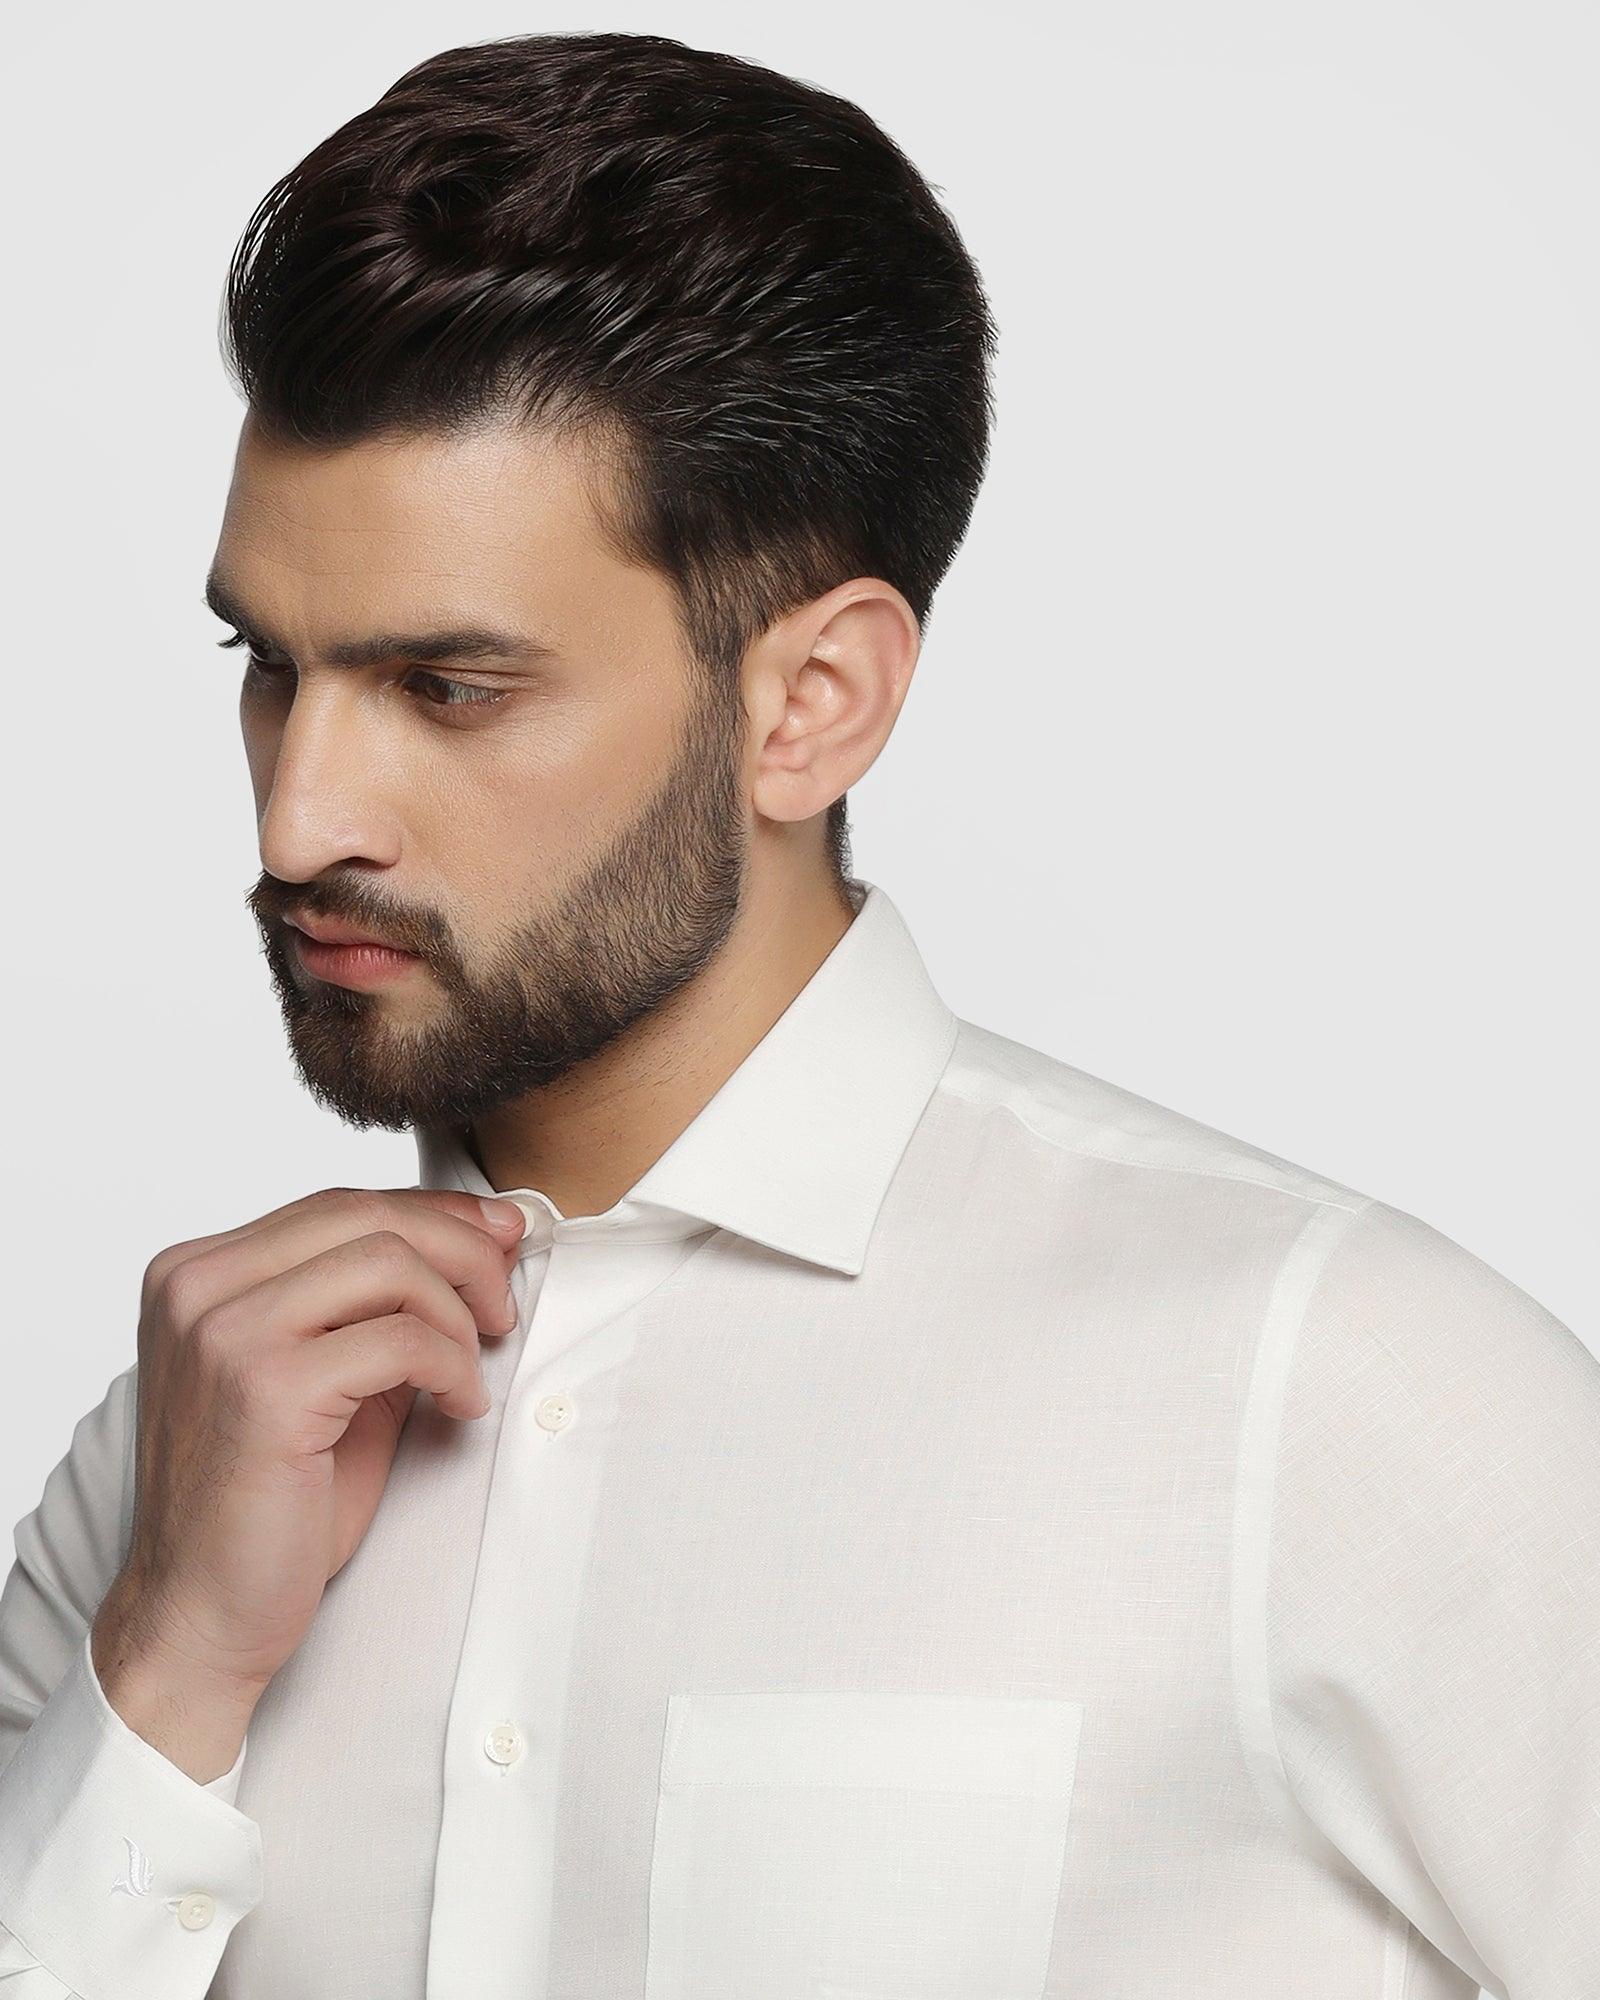 Linen Formal White Solid Shirt - Rado